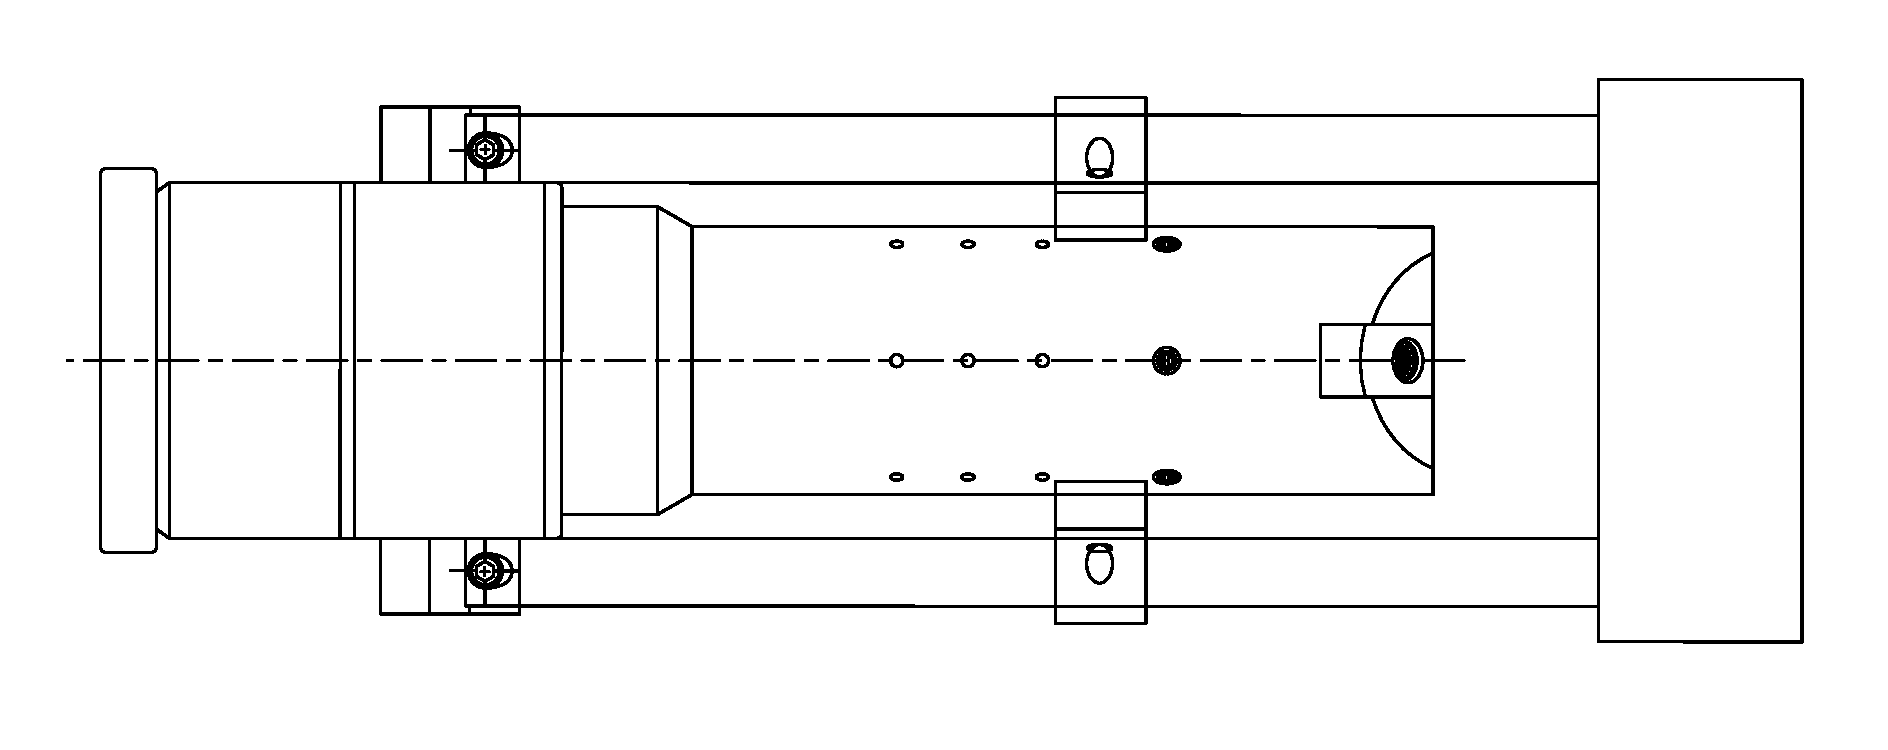 Global link connector system